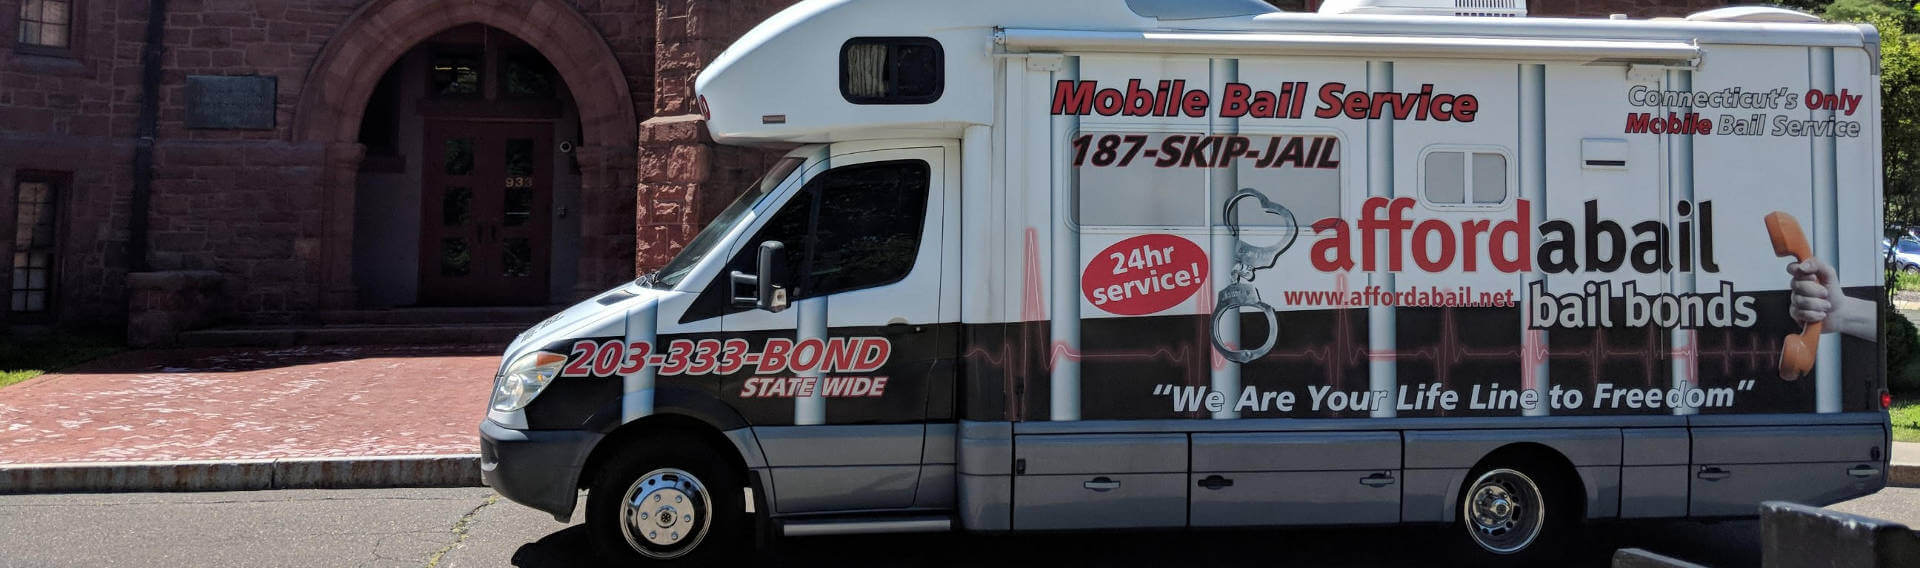 Mobile bail bonds service in North Haven CT